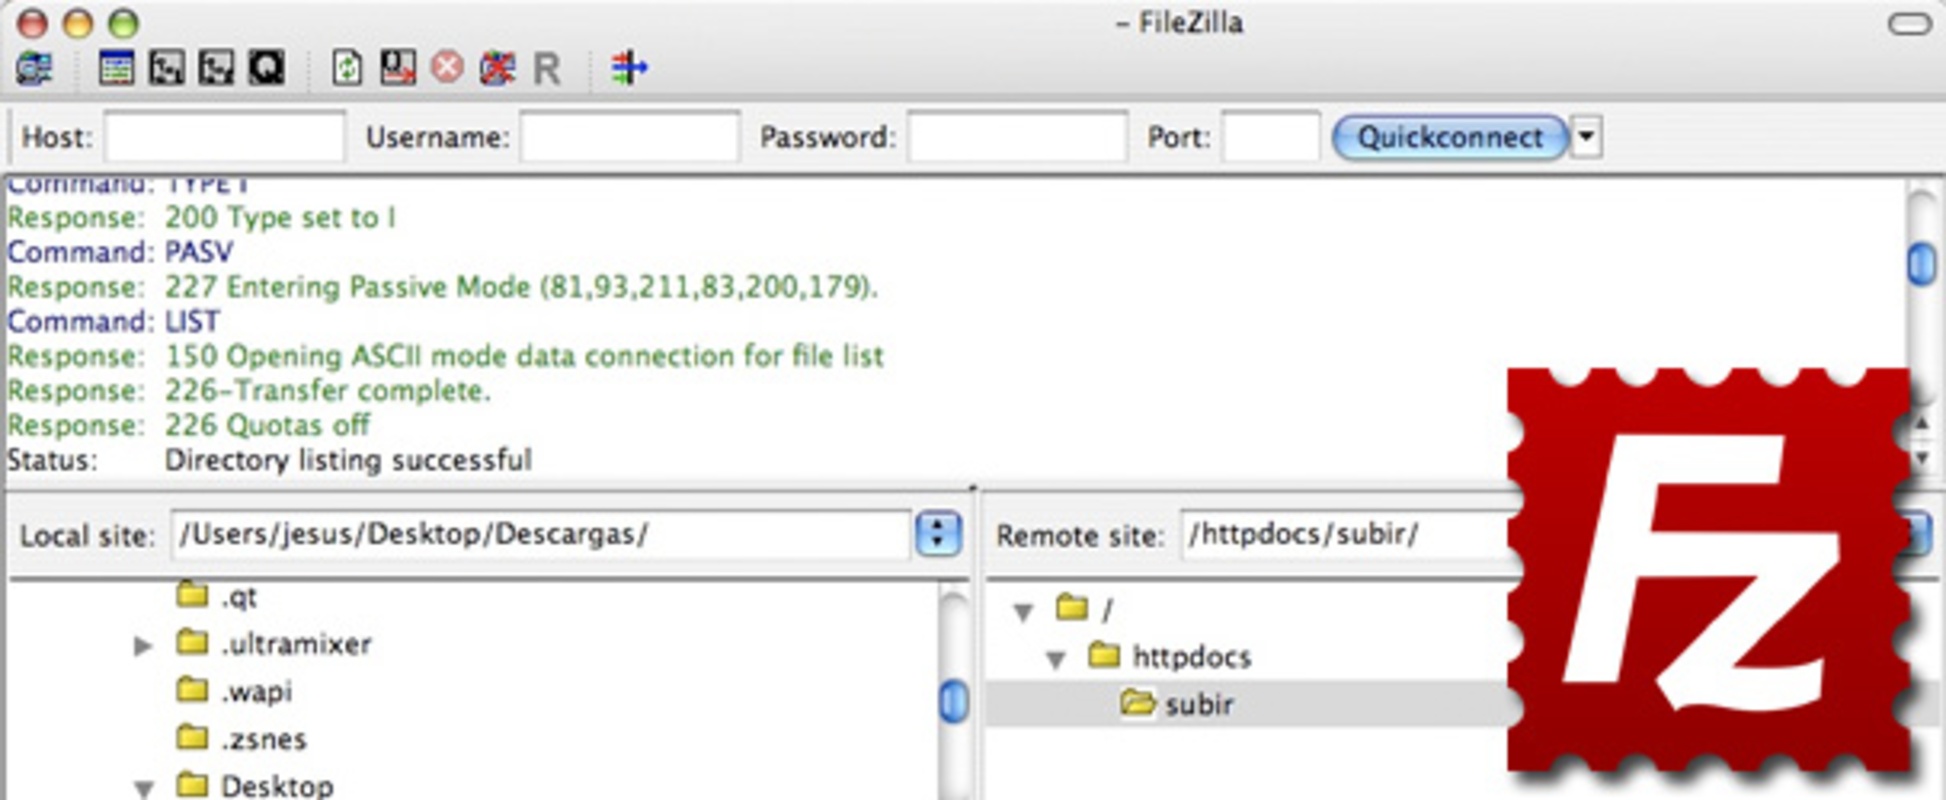 FileZilla 3.66.4 feature